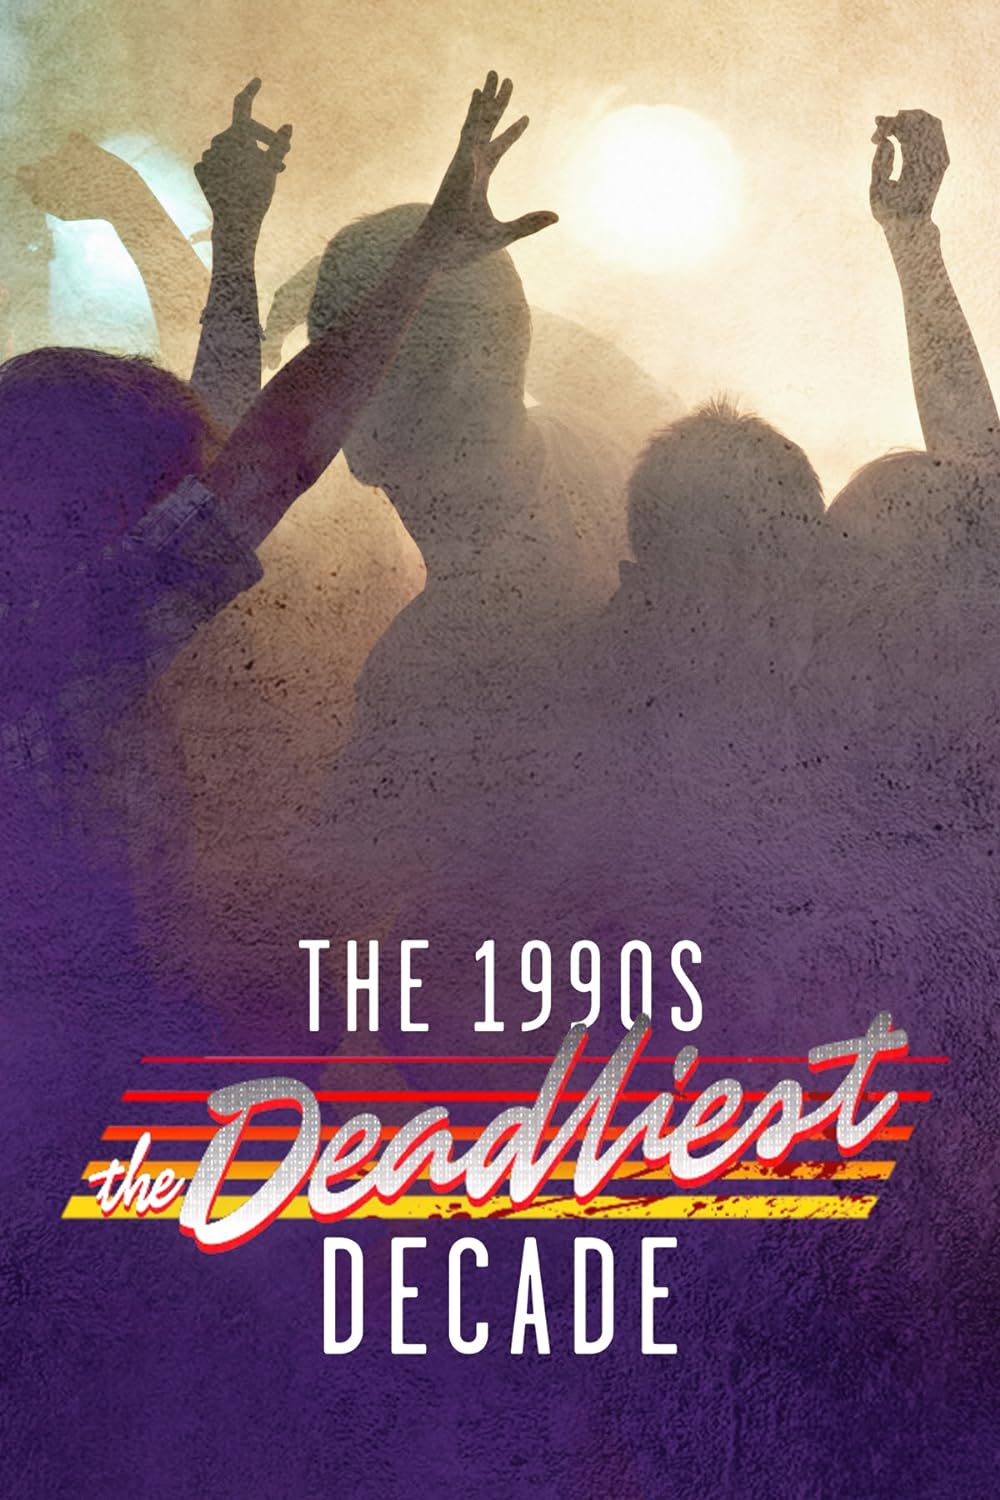 1990s: The Deadliest Decade